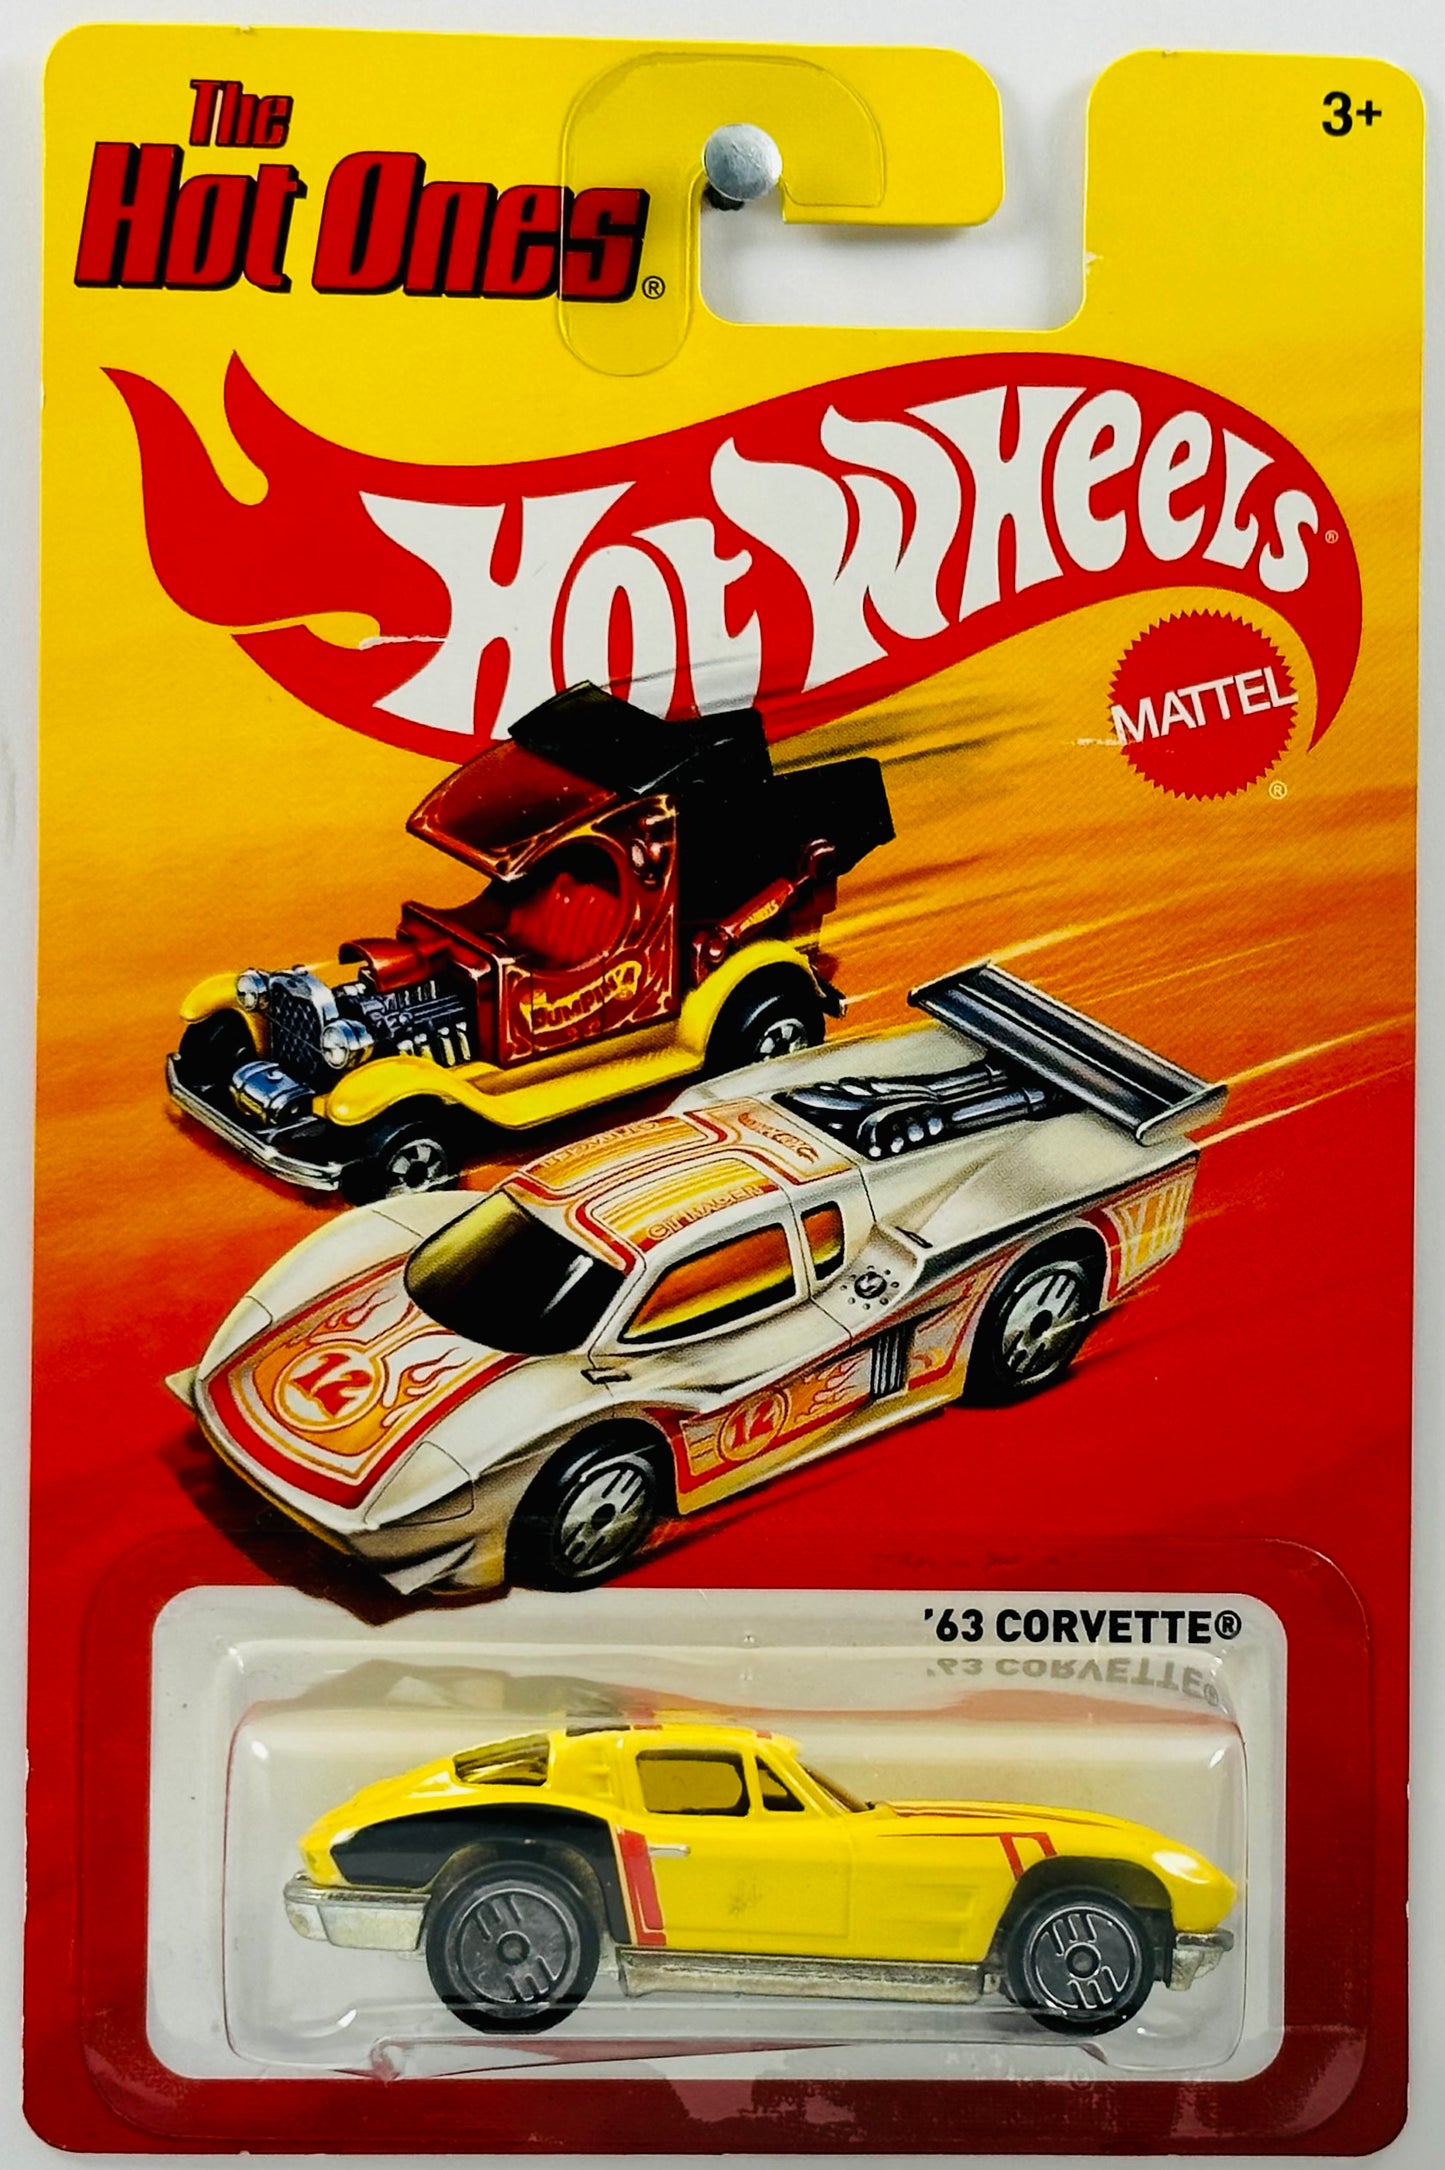 Hot Wheels 2012 - The Hot Ones - '63 Corvette - Yellow - Ultra Hot Wheels - Metal/Metal - Lightning Fast Metal Racers